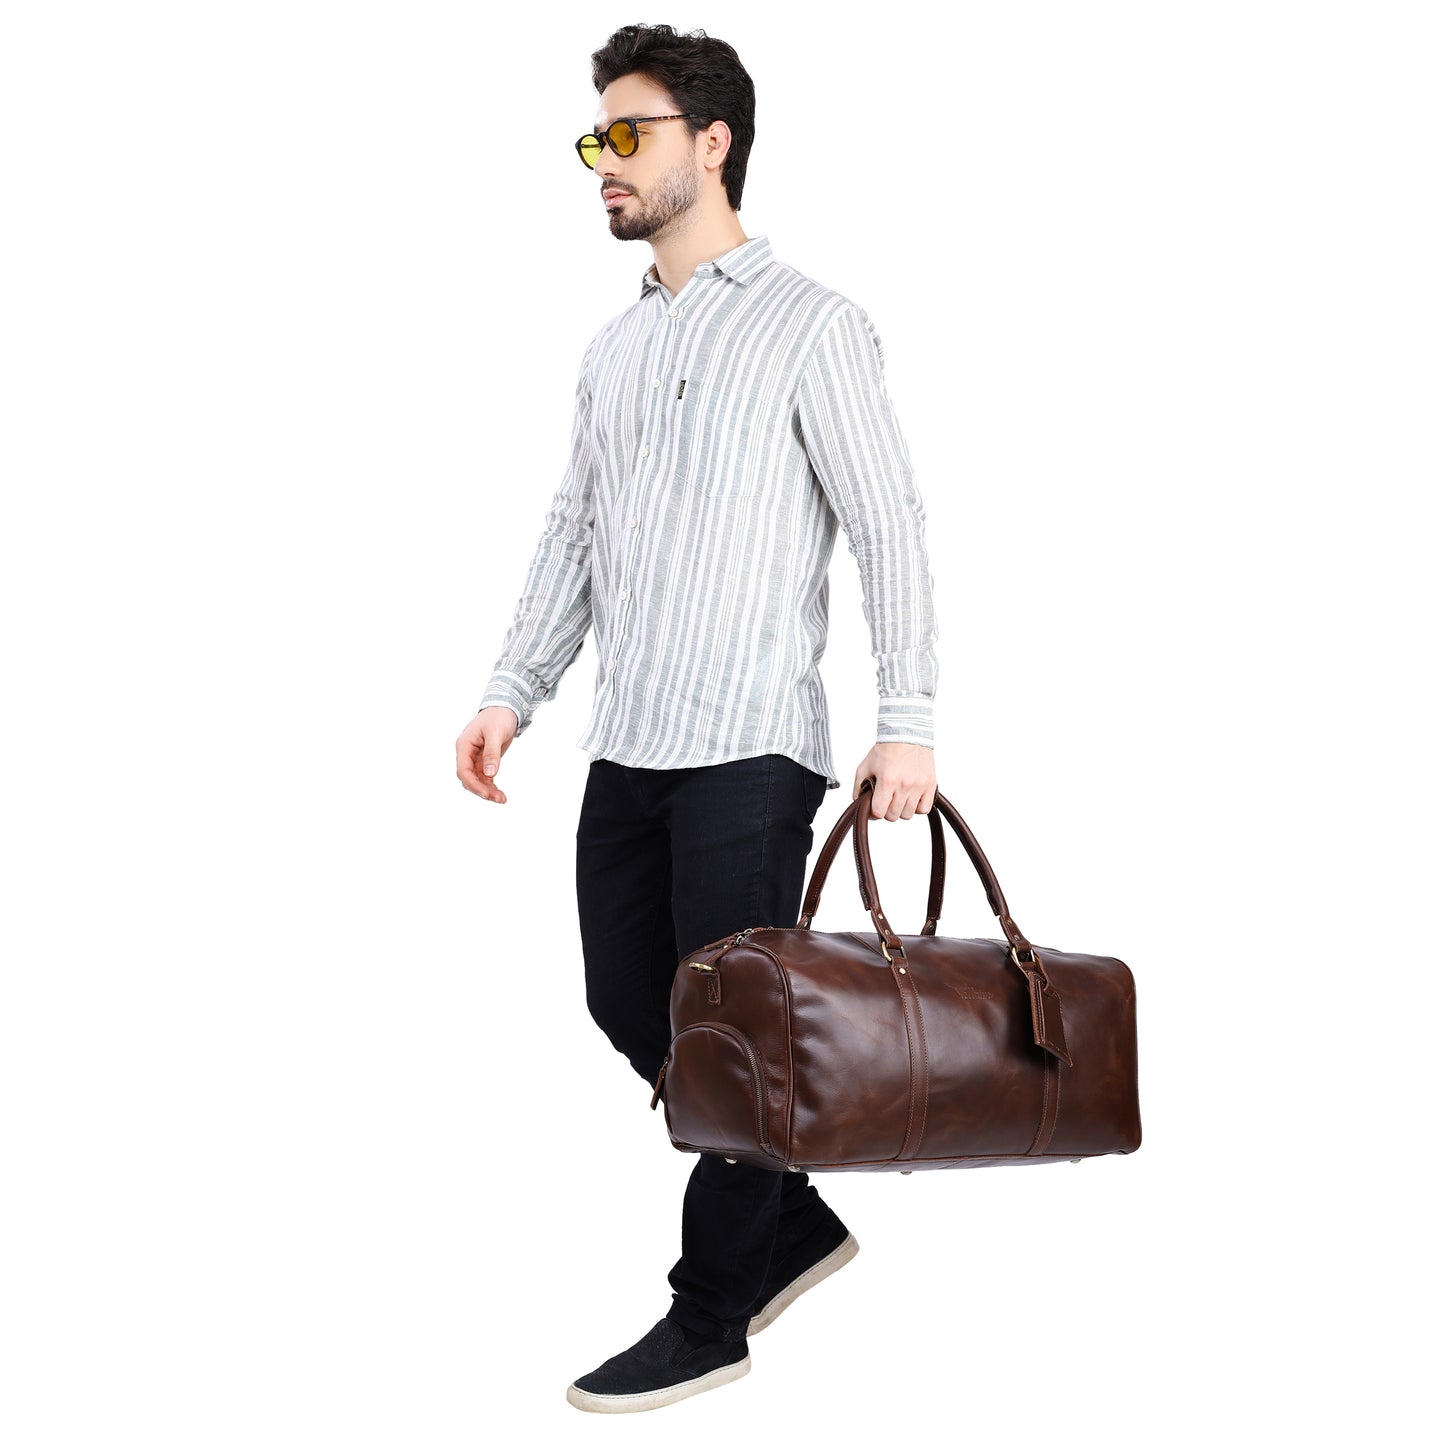 Leather Duffle Bag Men Personalized Weekender Bag Luggage 